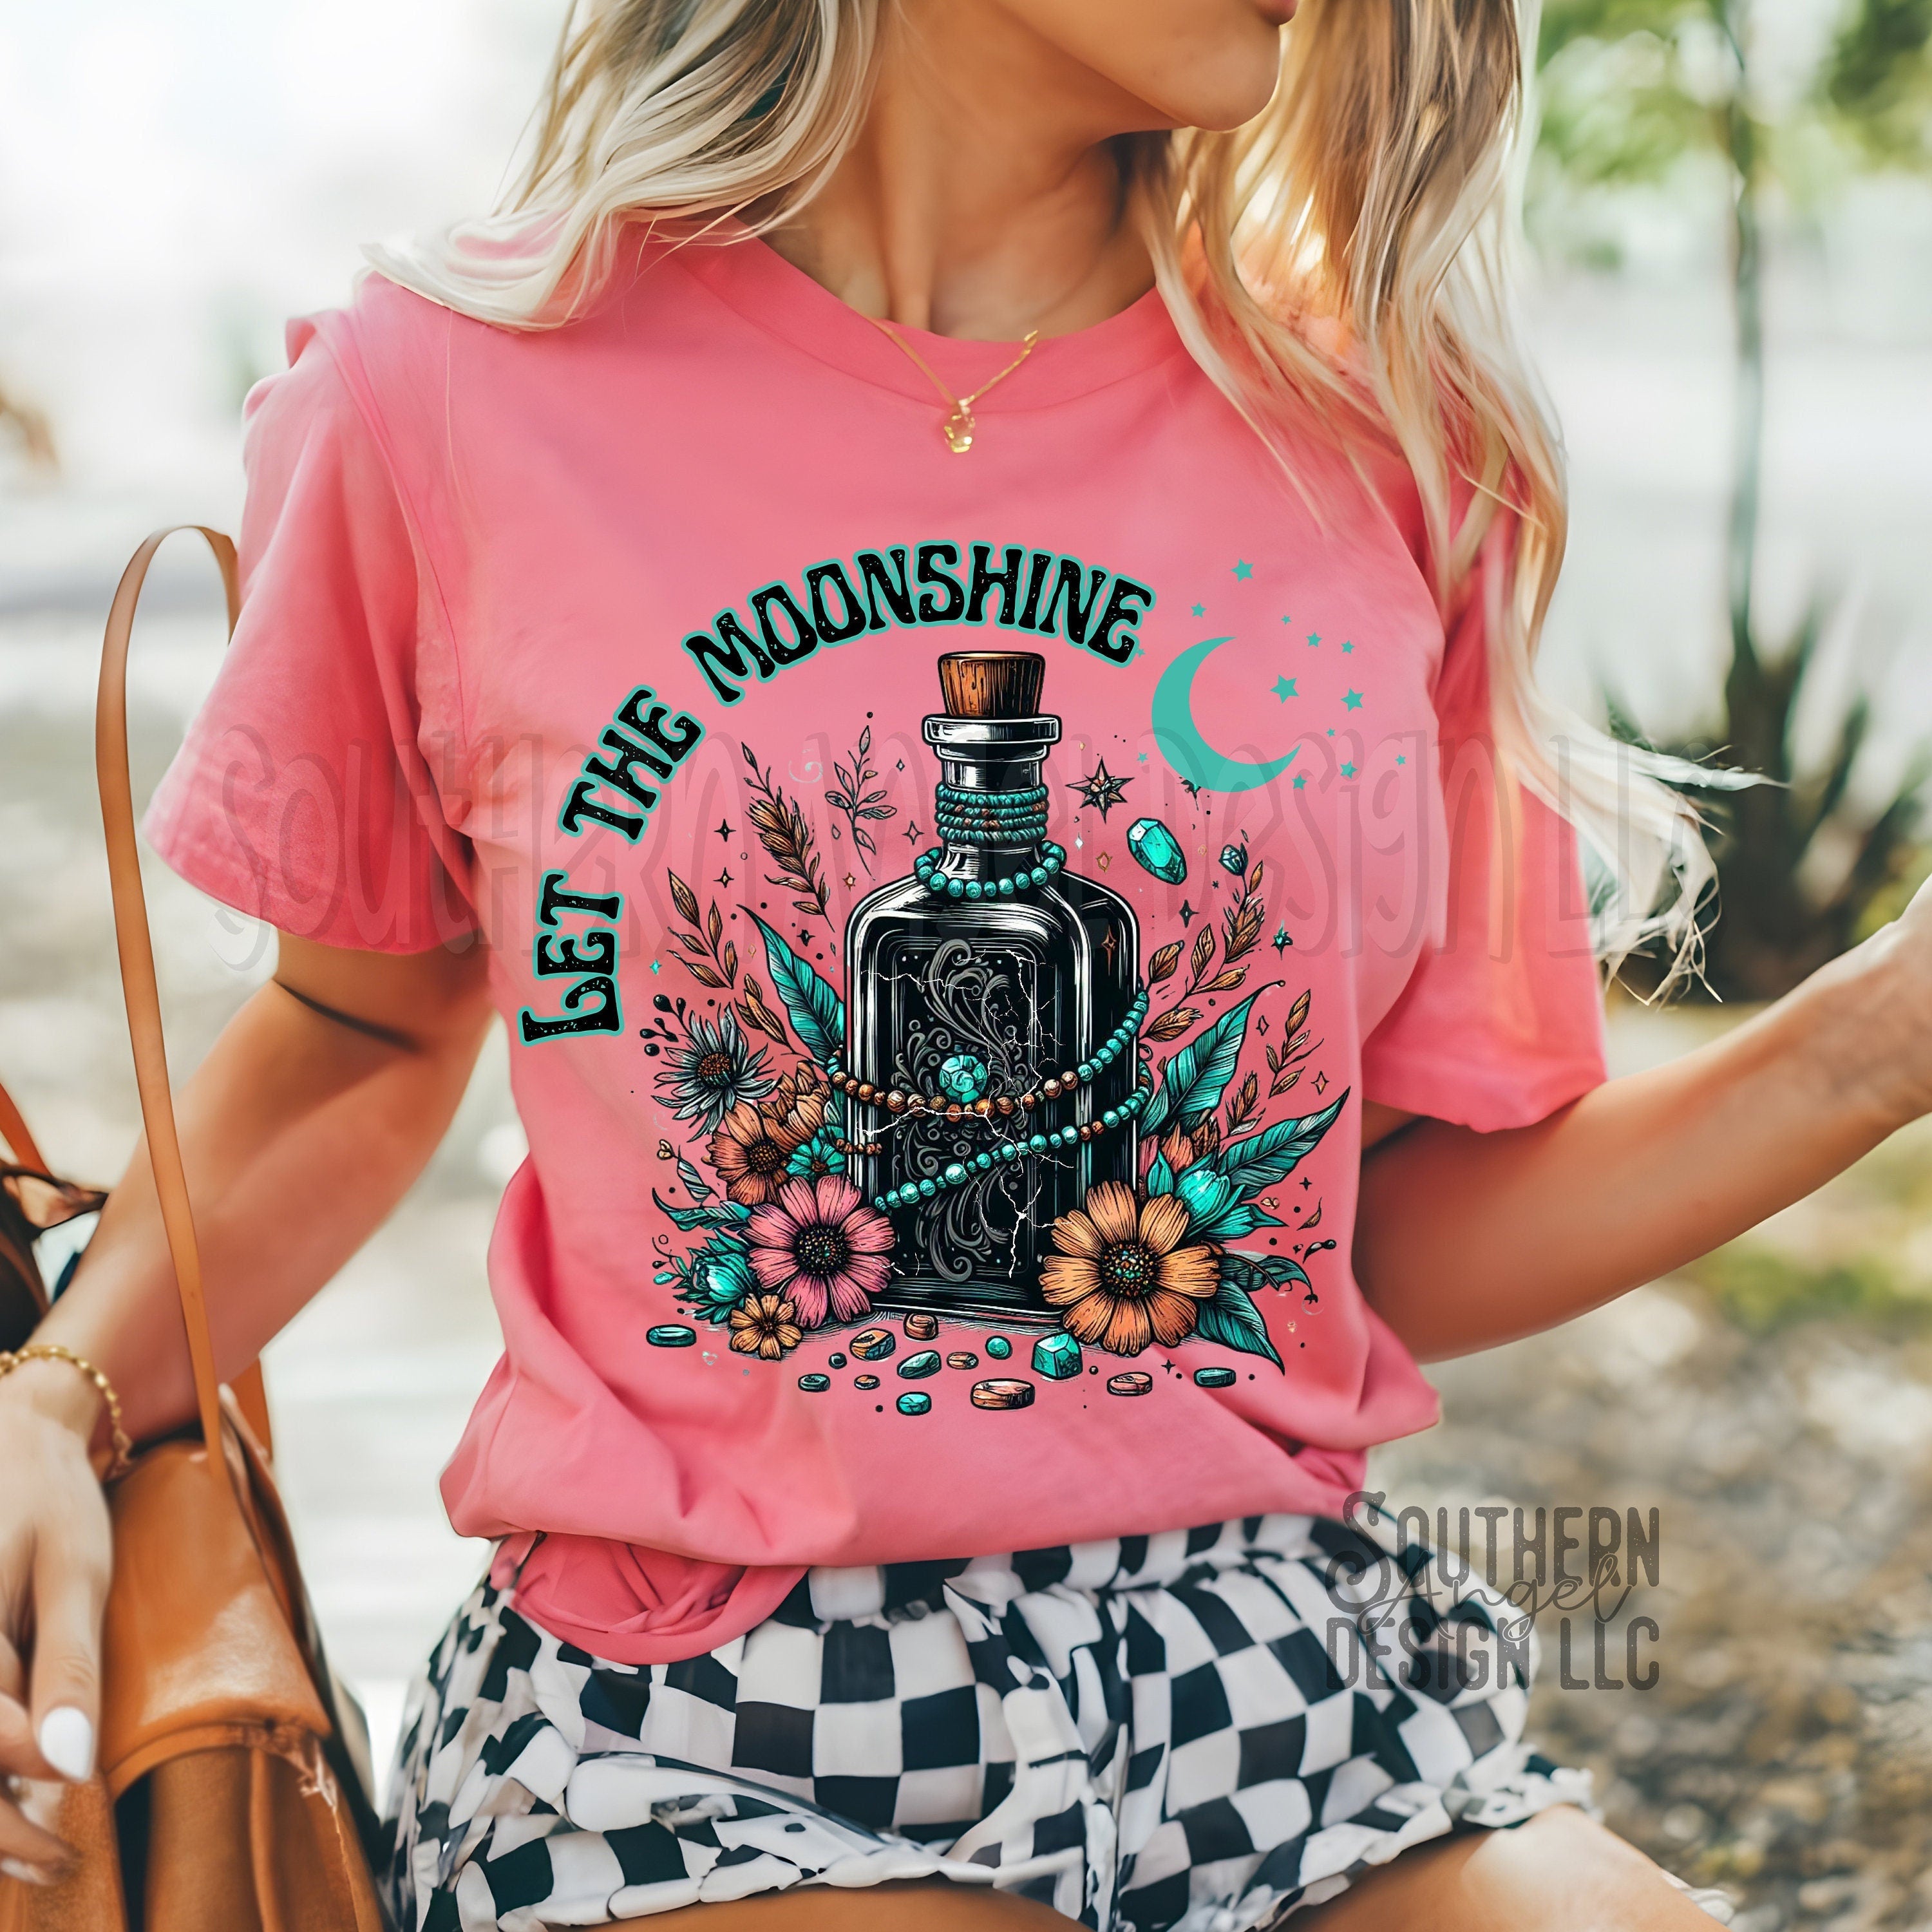 Country inspired shirt, Country music shirt, Music festival tank, Concert shirt, Rodeo shirt , Southern shirt